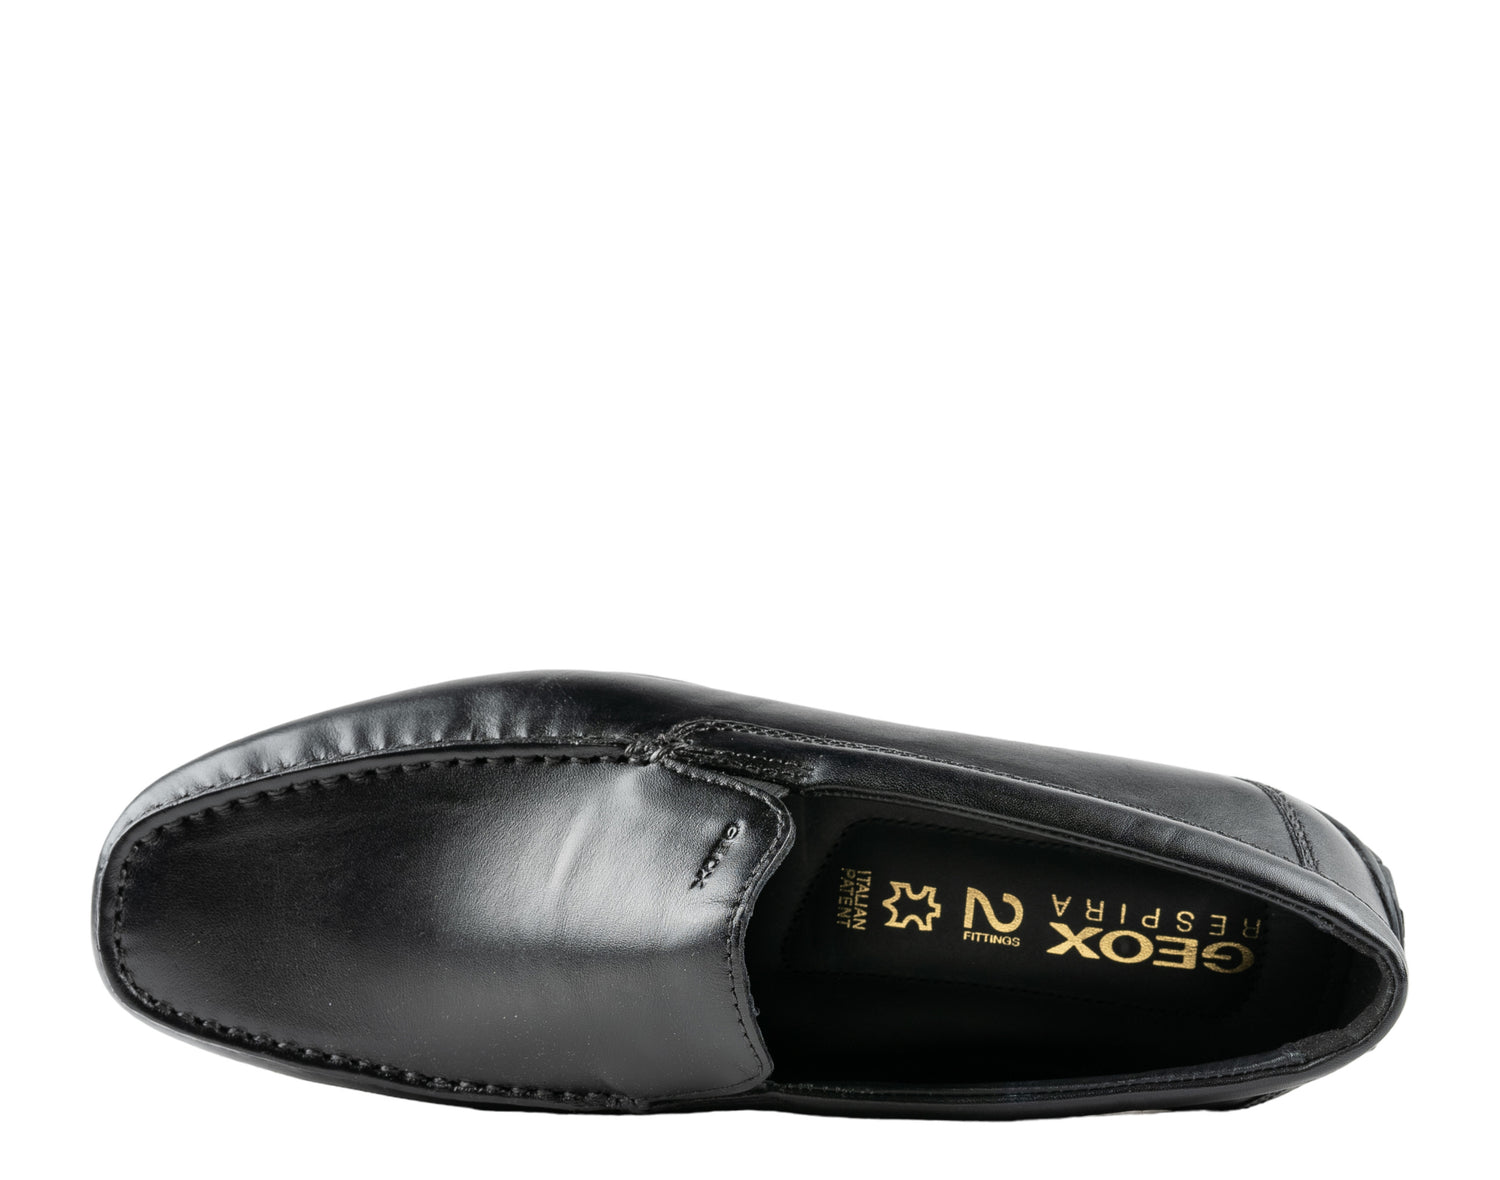 Geox Moner 2fit Wide Mocassin Loafer Men's Casual Shoes